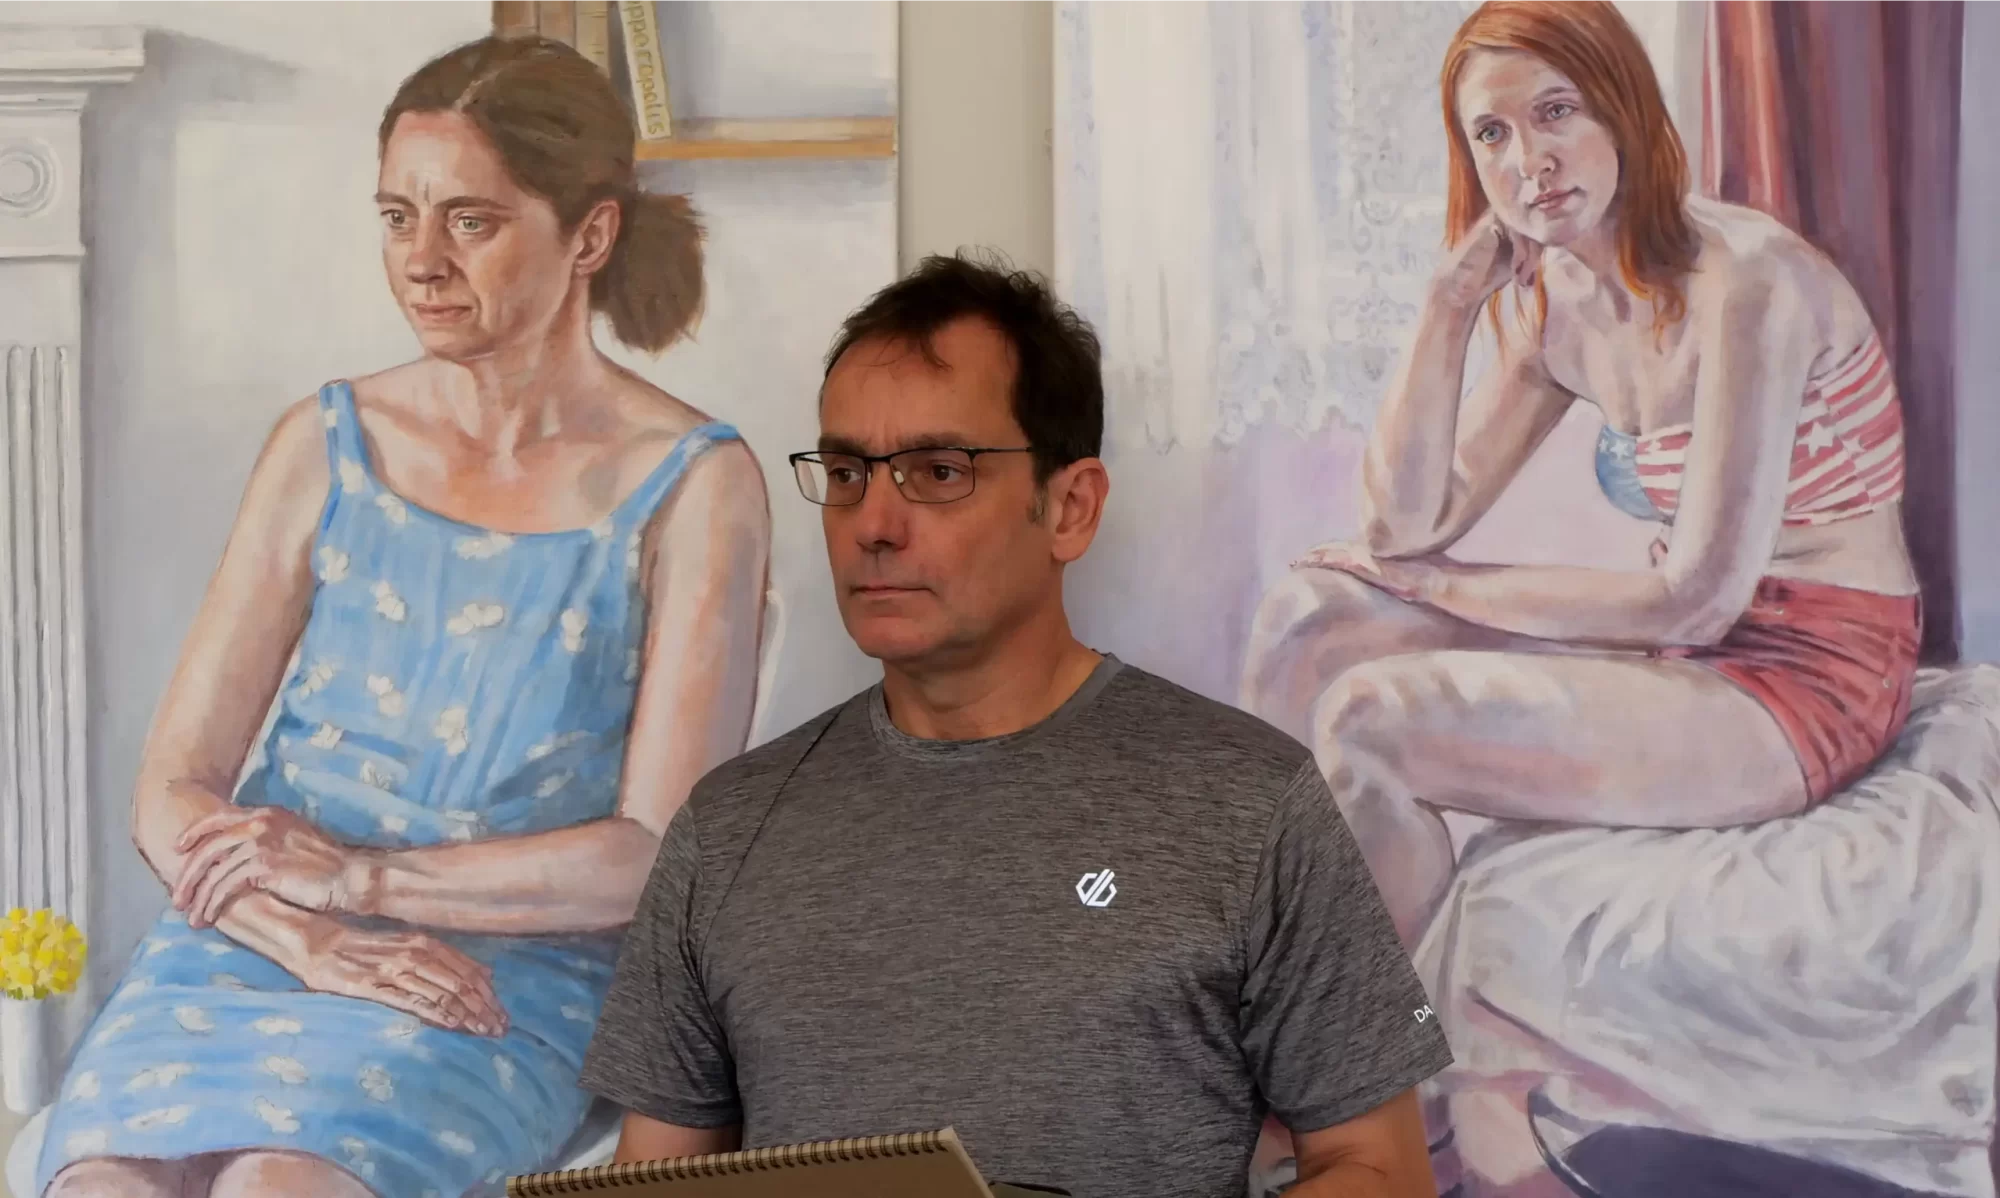 portrait artist Peter D'Alessandri in front of two large portrait paintings